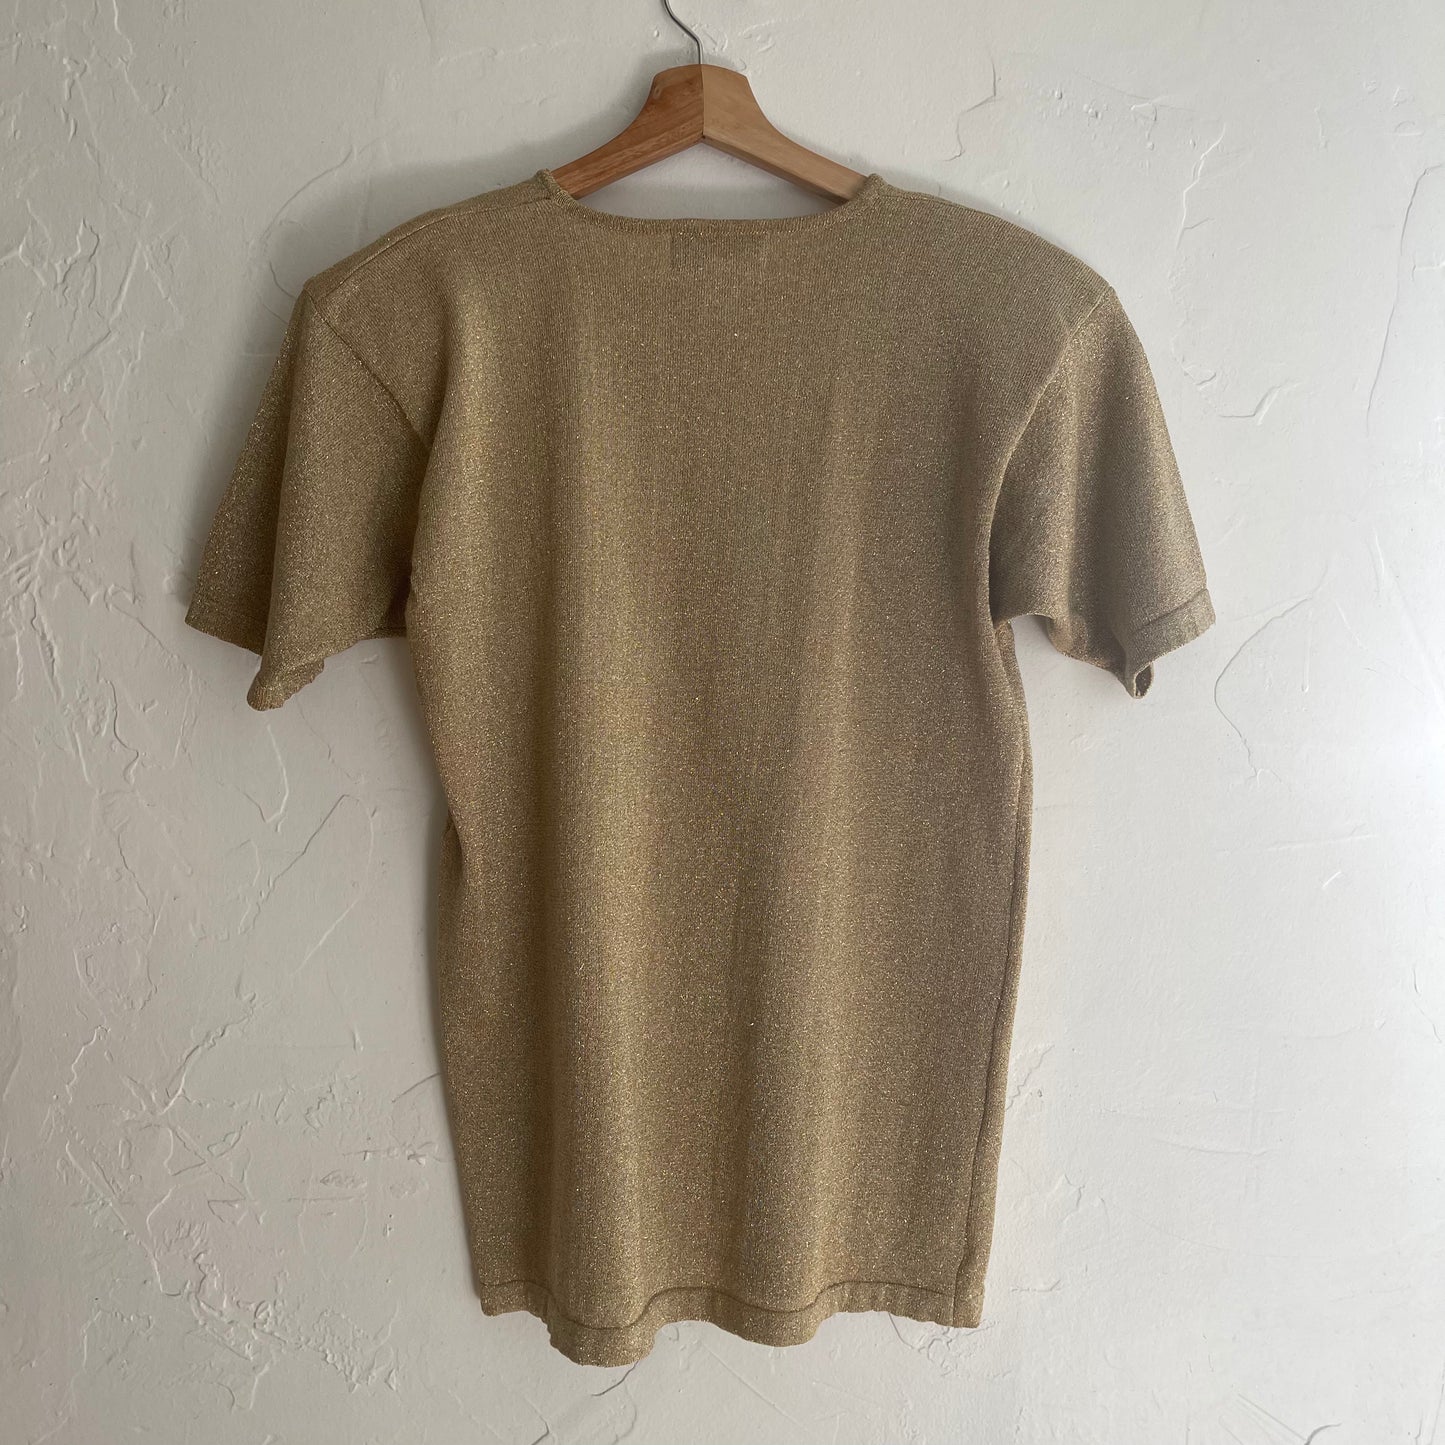 Vintage 90’s Metallic Gold Short Sleeve Knit Top